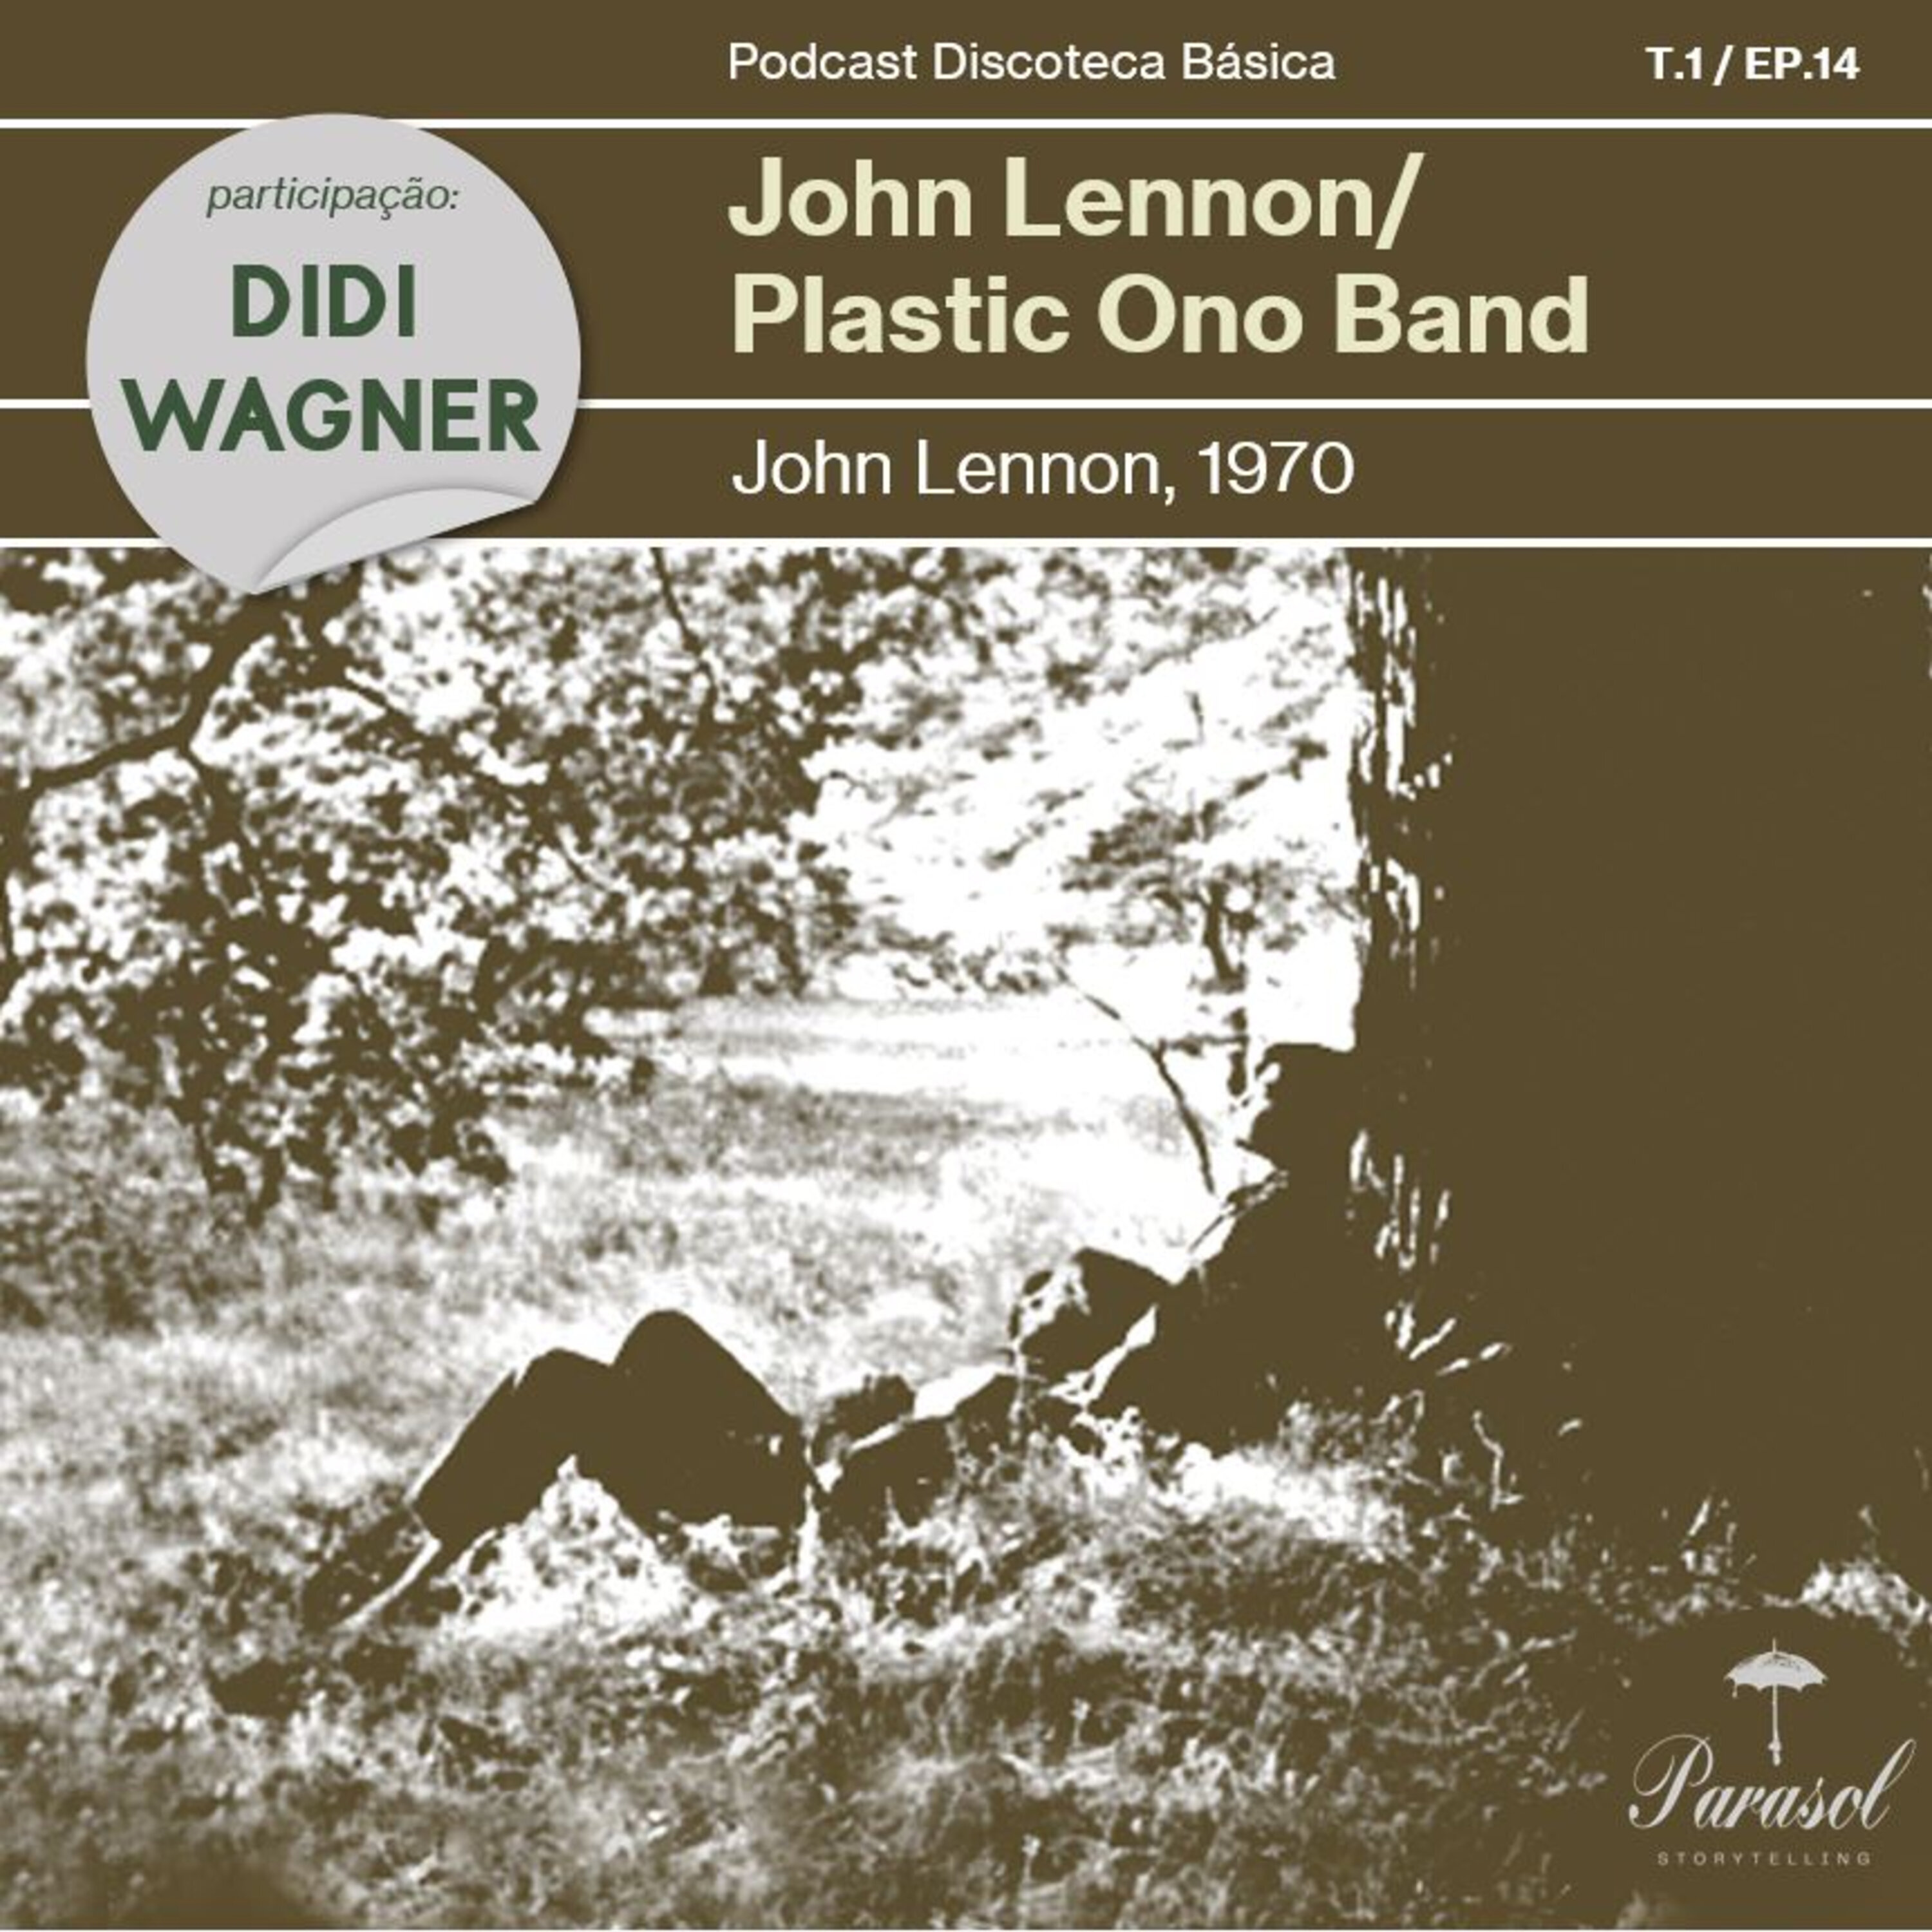 T01E14: John Lennon/Plastic Ono Band - John Lennon (1970)